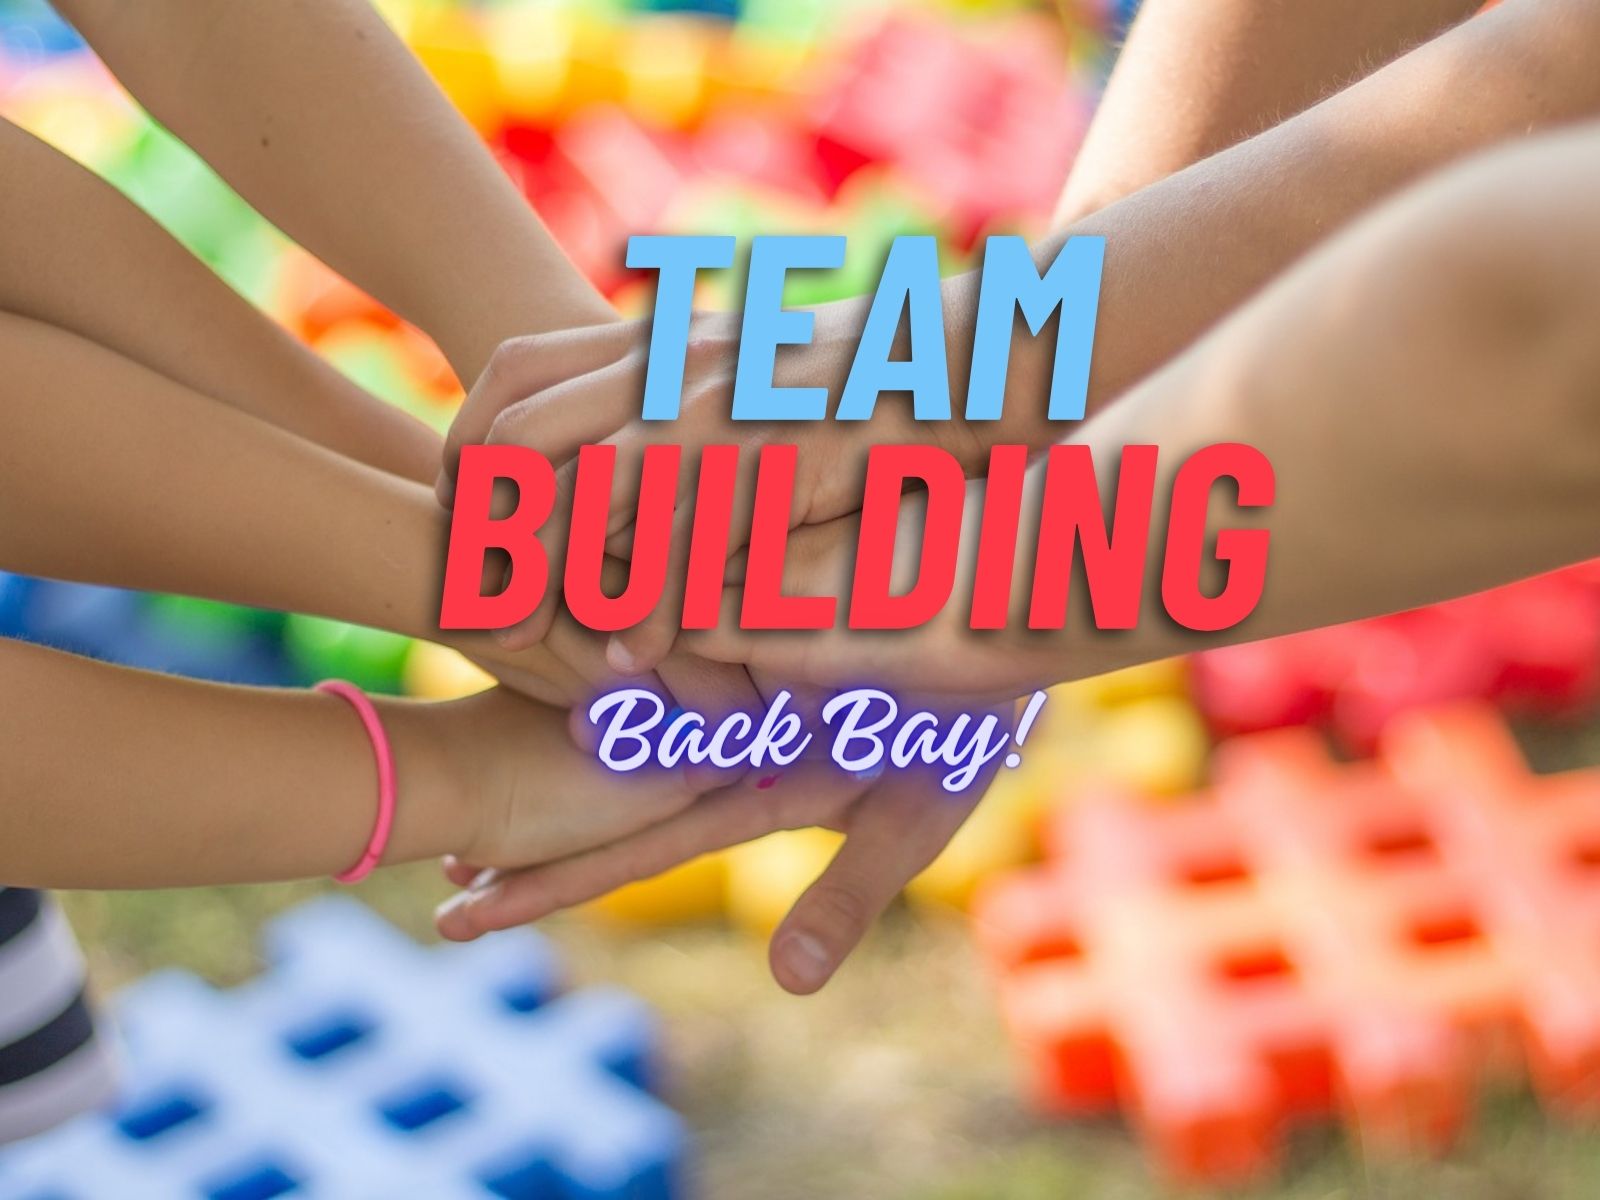 Team Building Event in Back Bay, Massachusetts: Unleash the Power of Teamwork